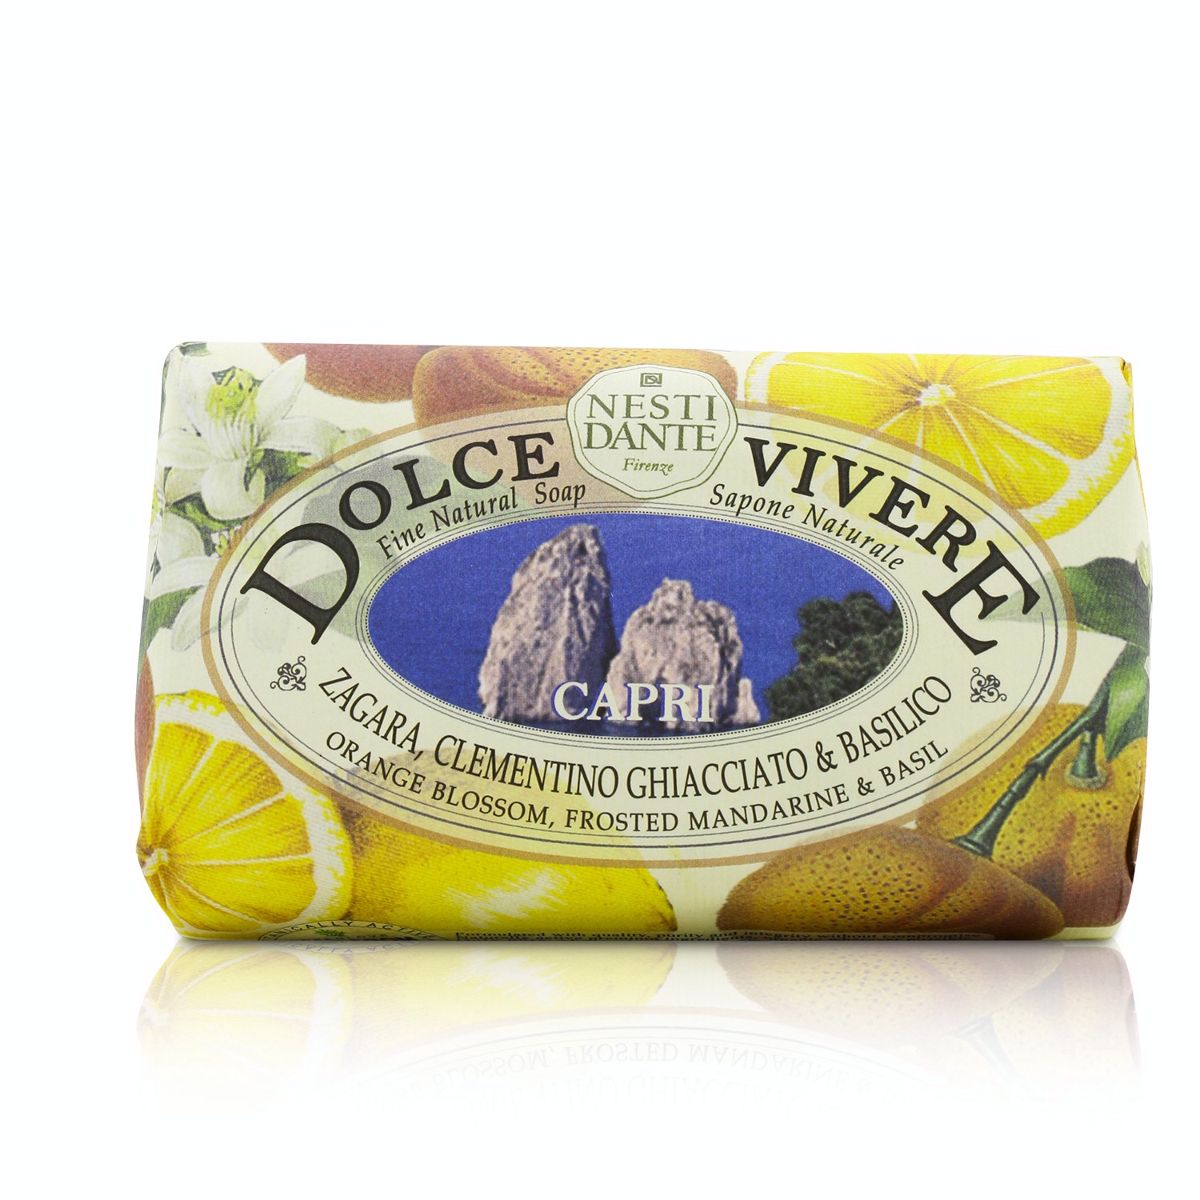 Dolce Vivere Fine Natural Soap - Capri - Orange Blossom Frosted Mandarine  Basil Nesti Dante Image